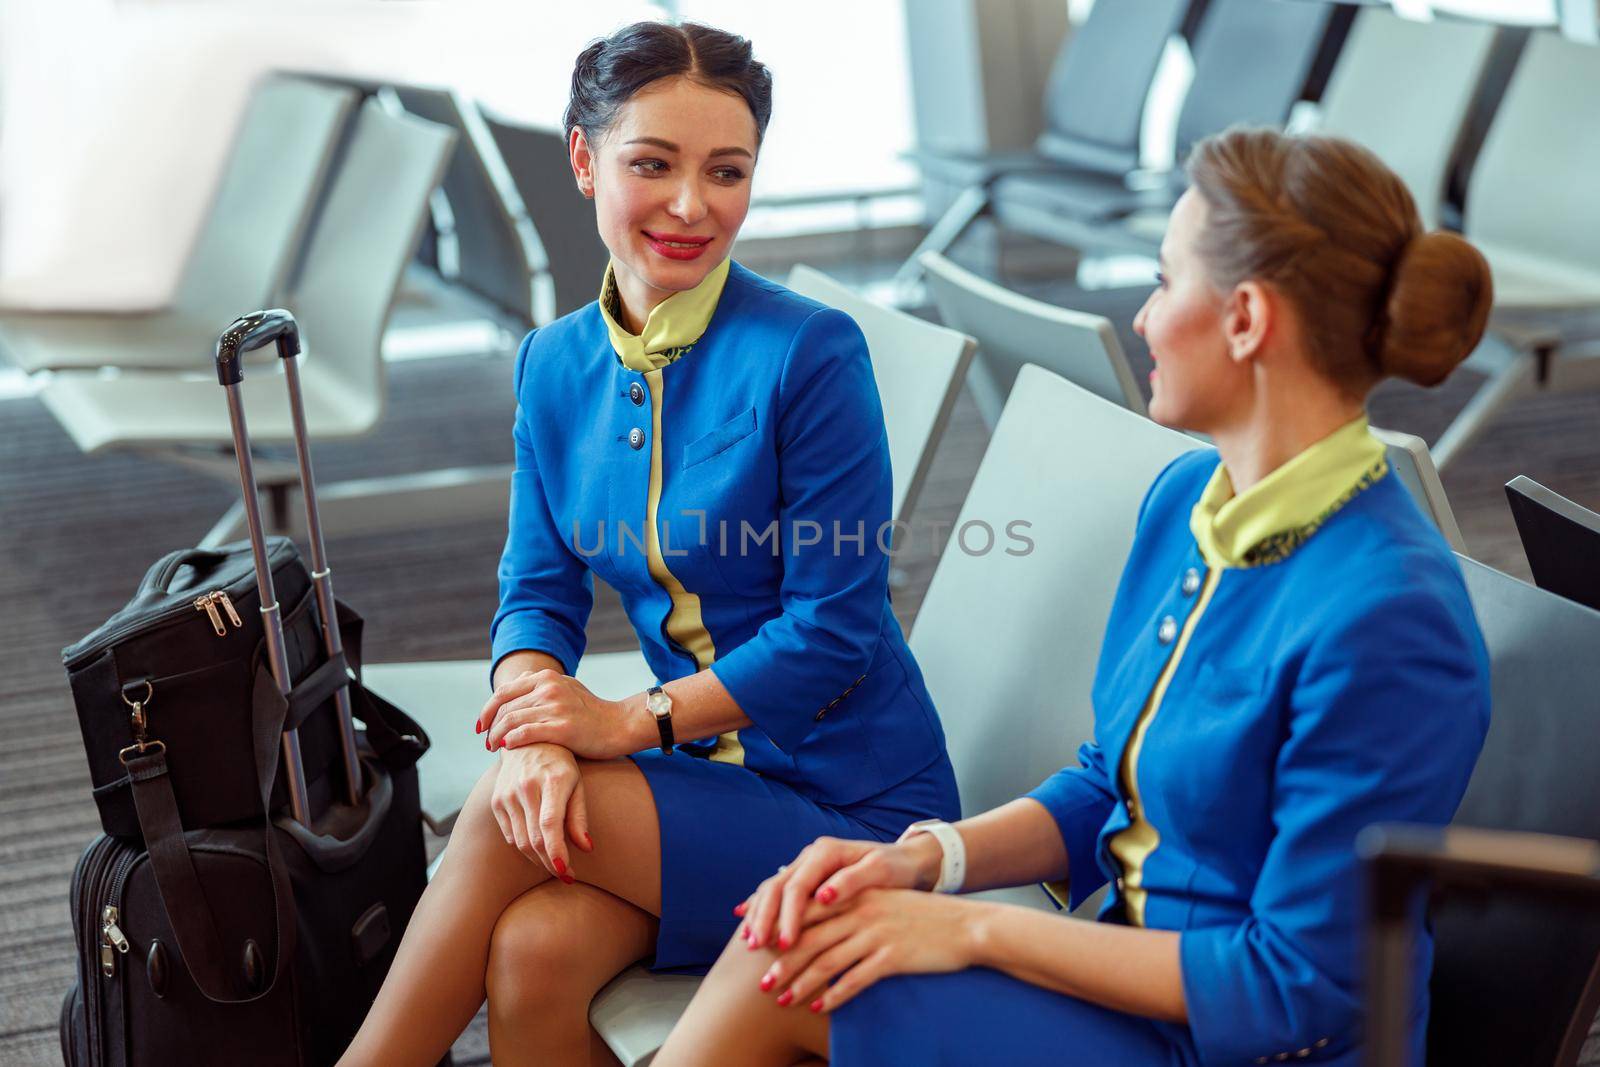 Flight attendants sitting on chairs in airport departure lounge by Yaroslav_astakhov